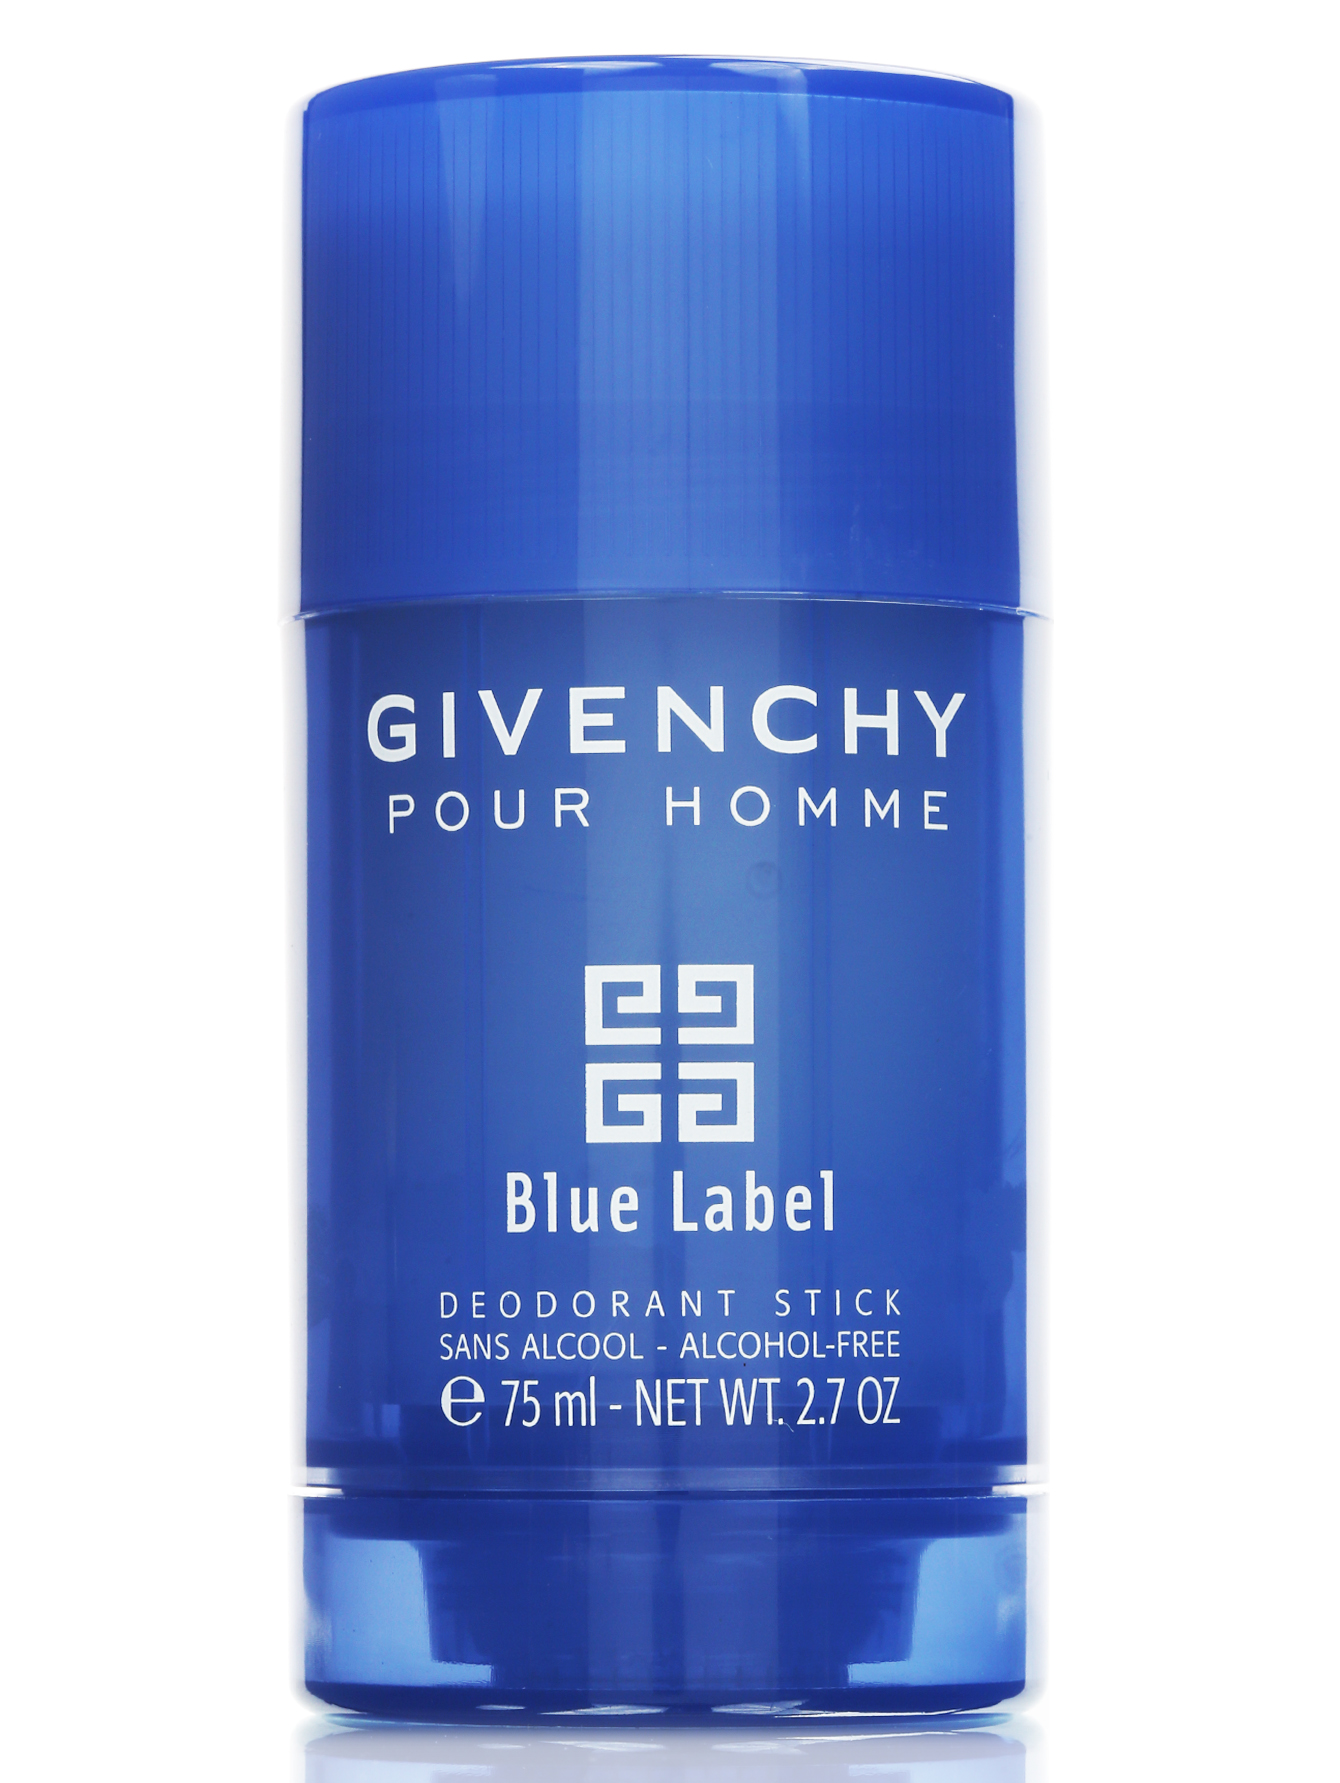  Дезодорант - Givenchy Blue Label - Общий вид